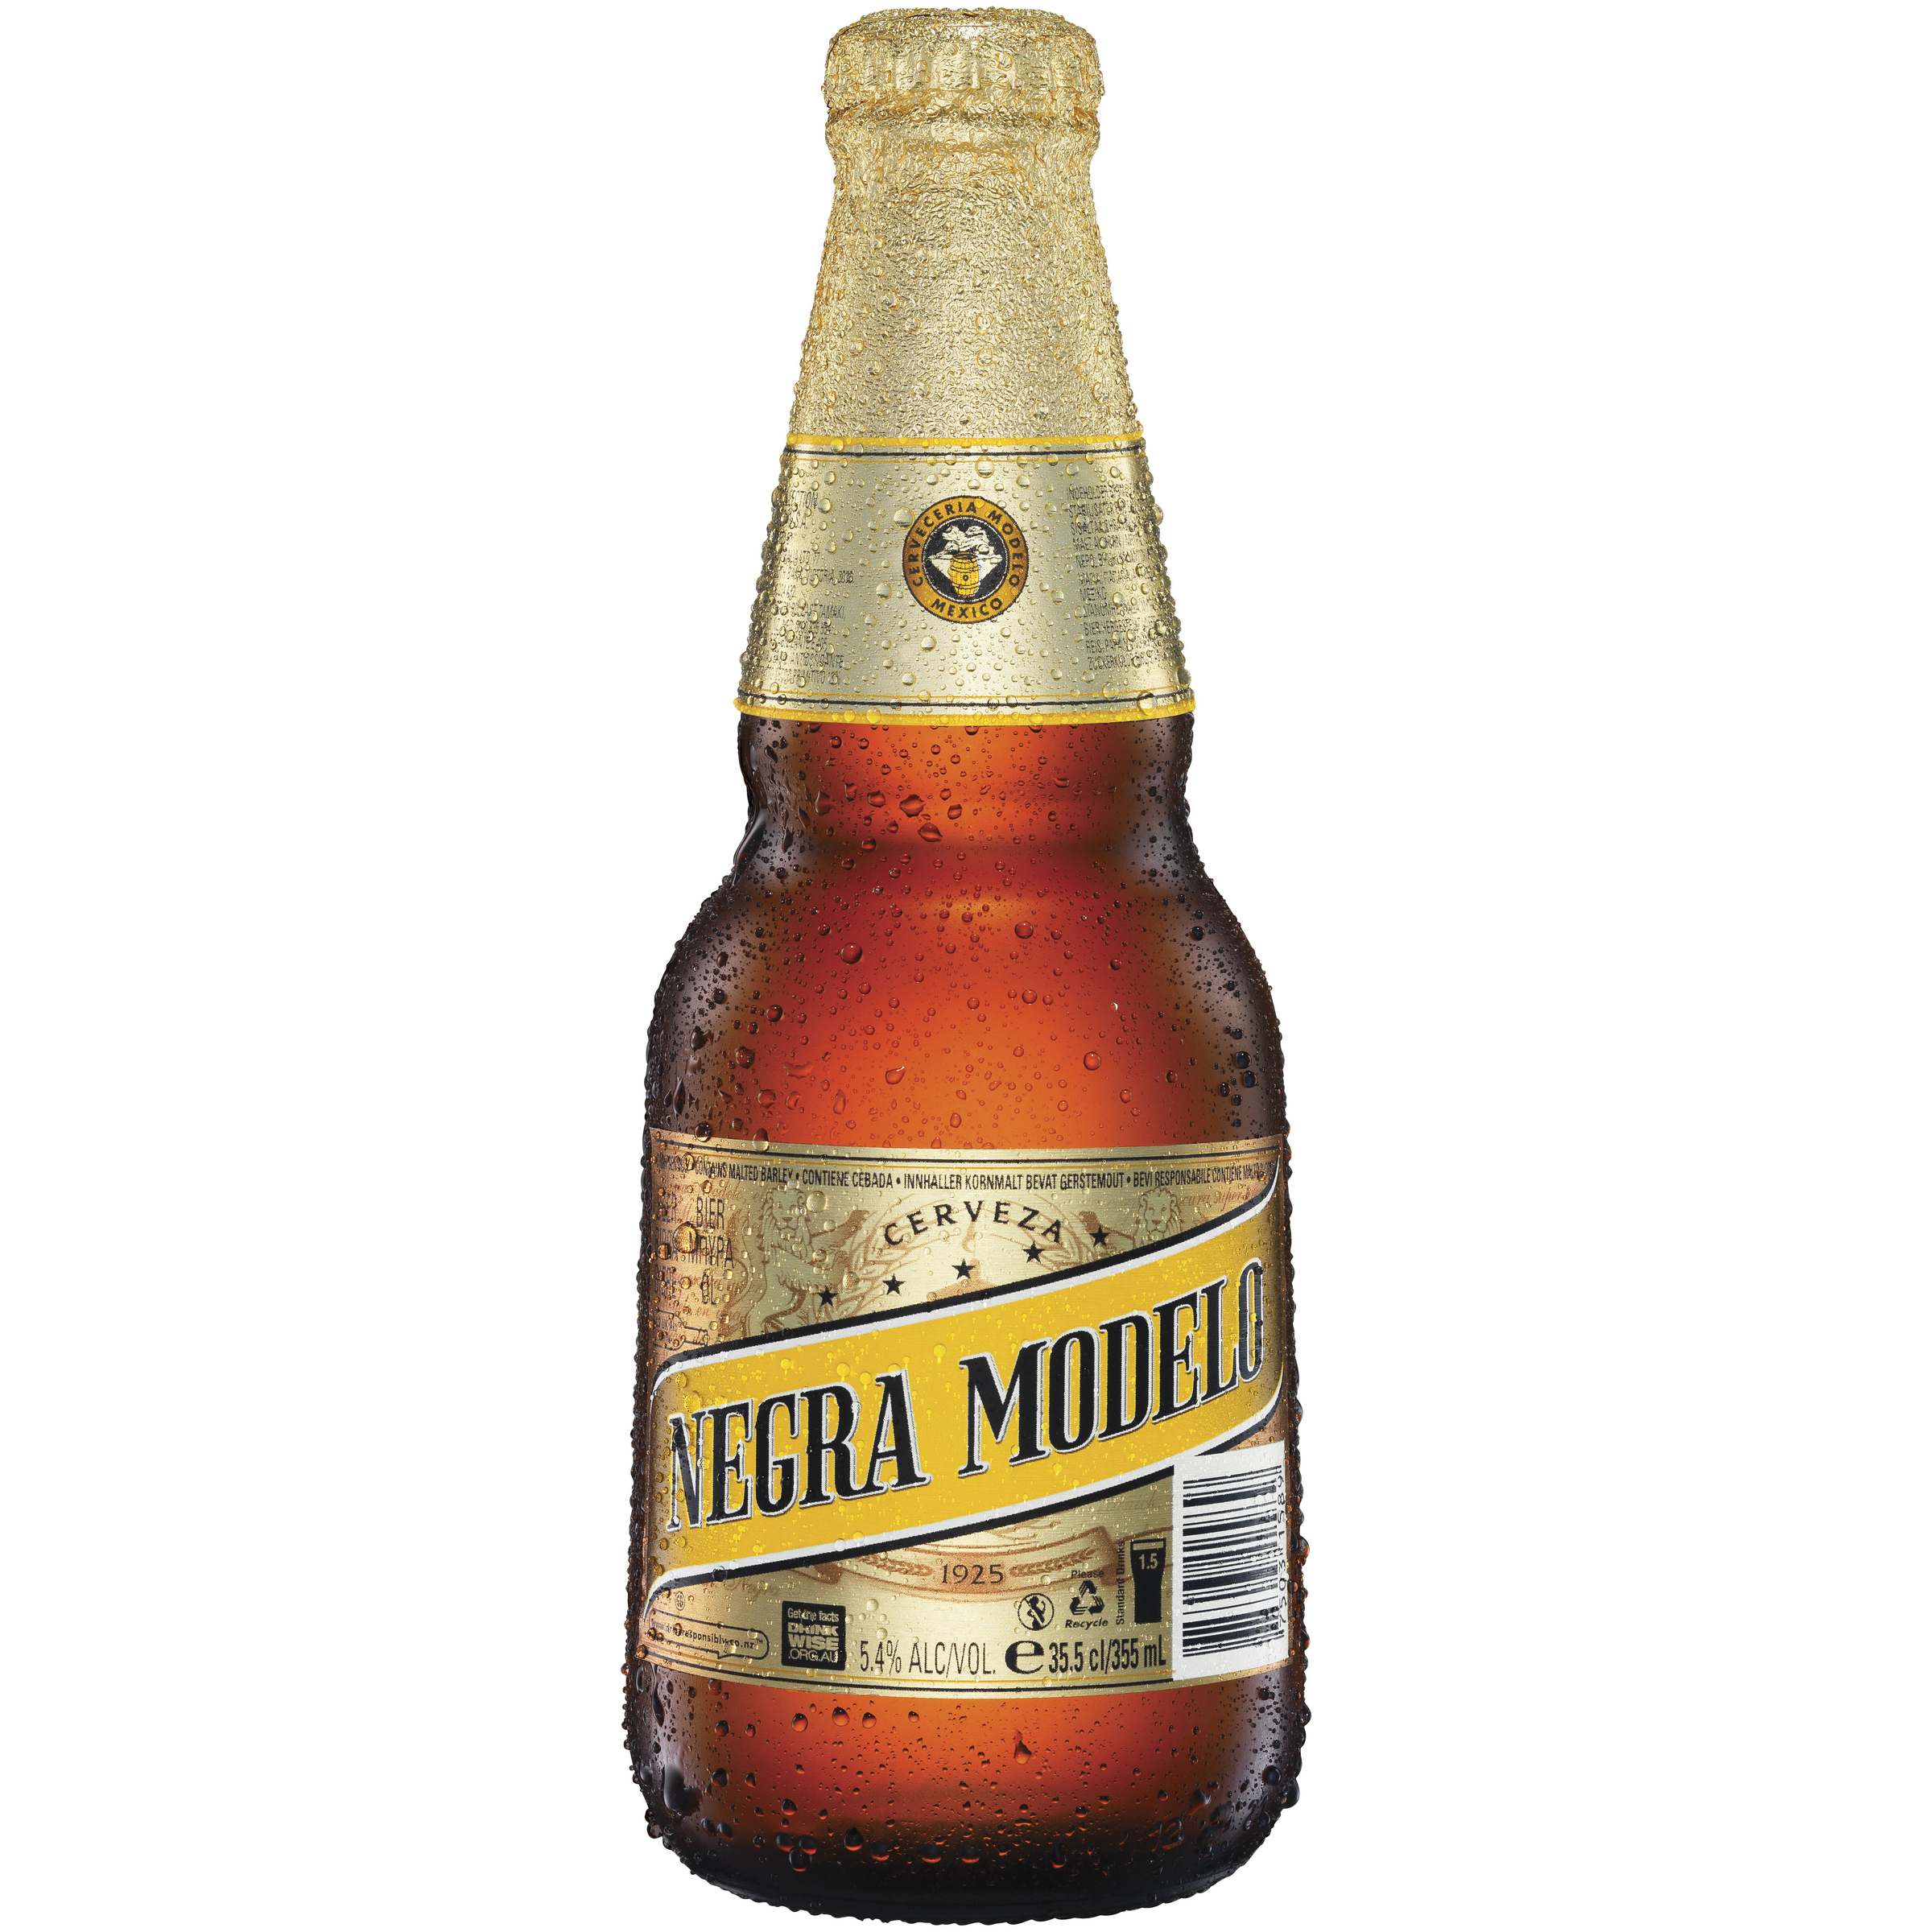 Modelo Beer : El Modelo Nutrition Facts | Besto Blog - Not all mexican